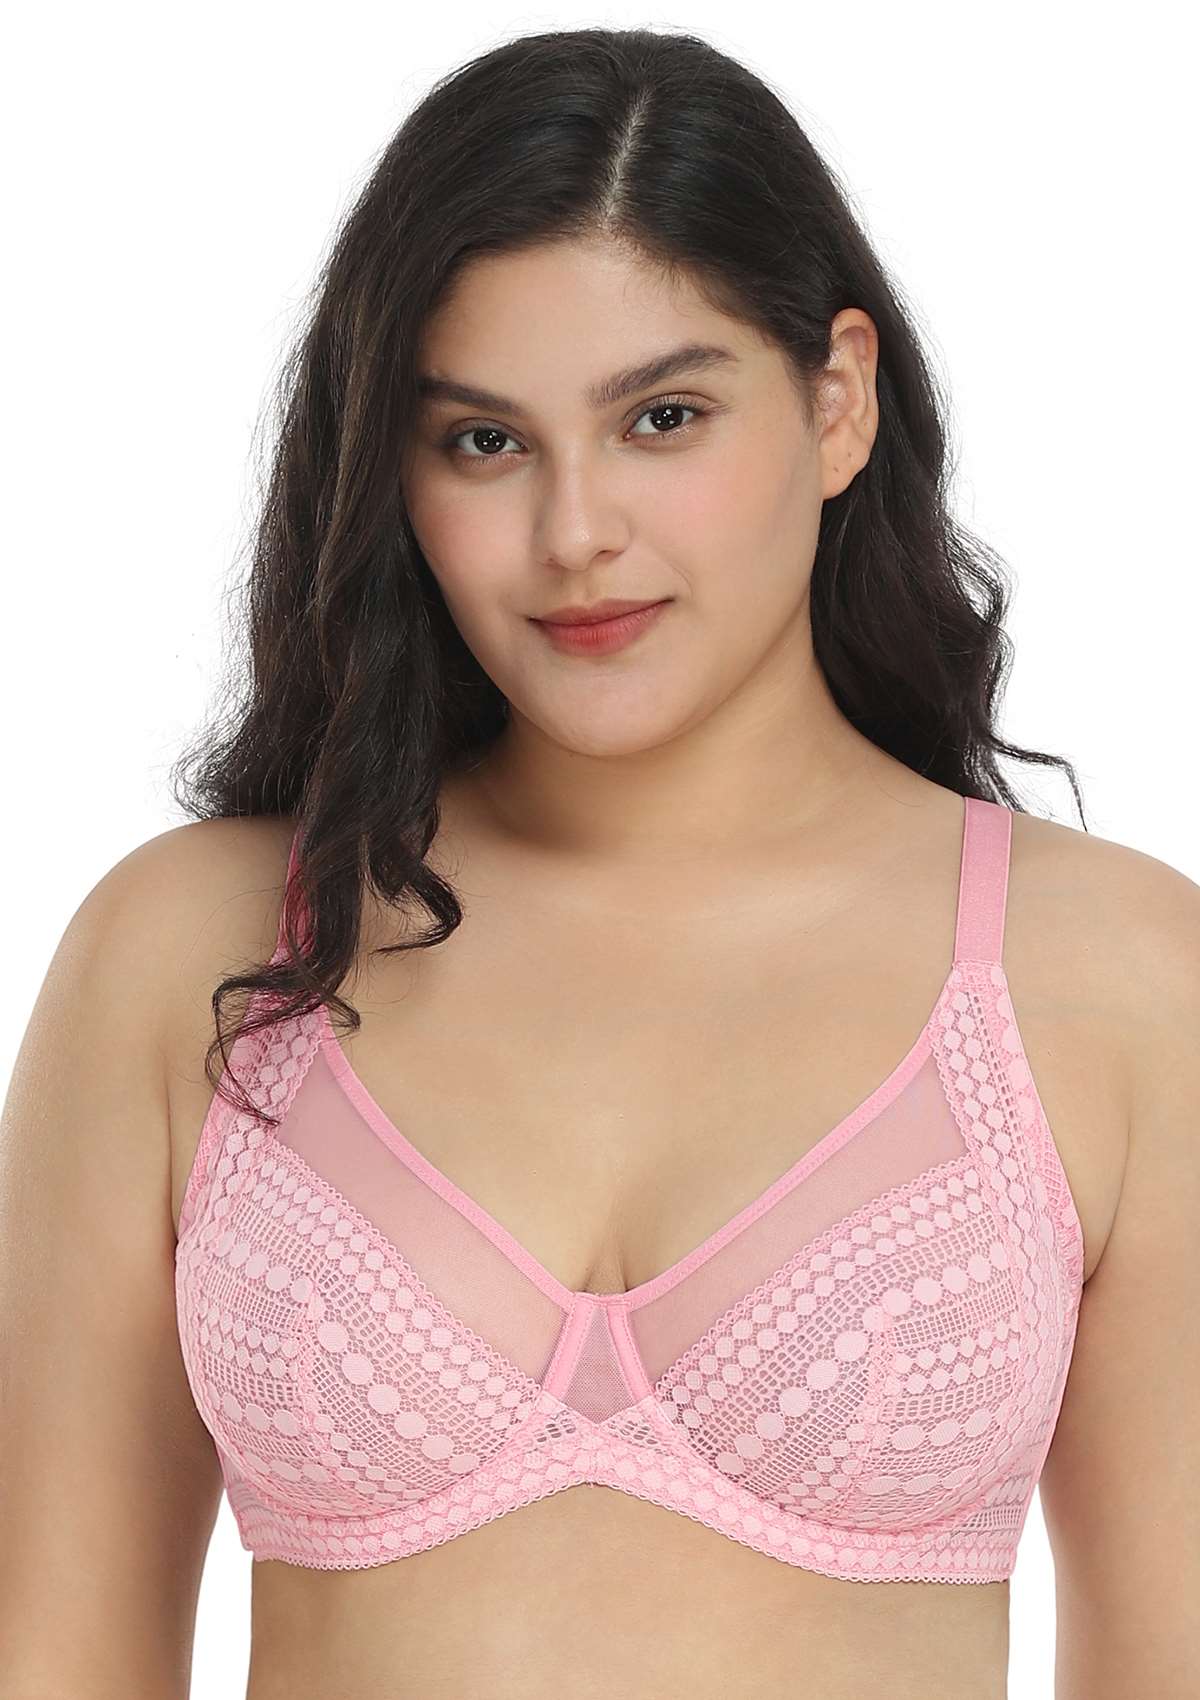 HSIA Heroine Lace Unlined Bra: Bra That Hides Back Fat - Plus Size - Pink / 42 / C